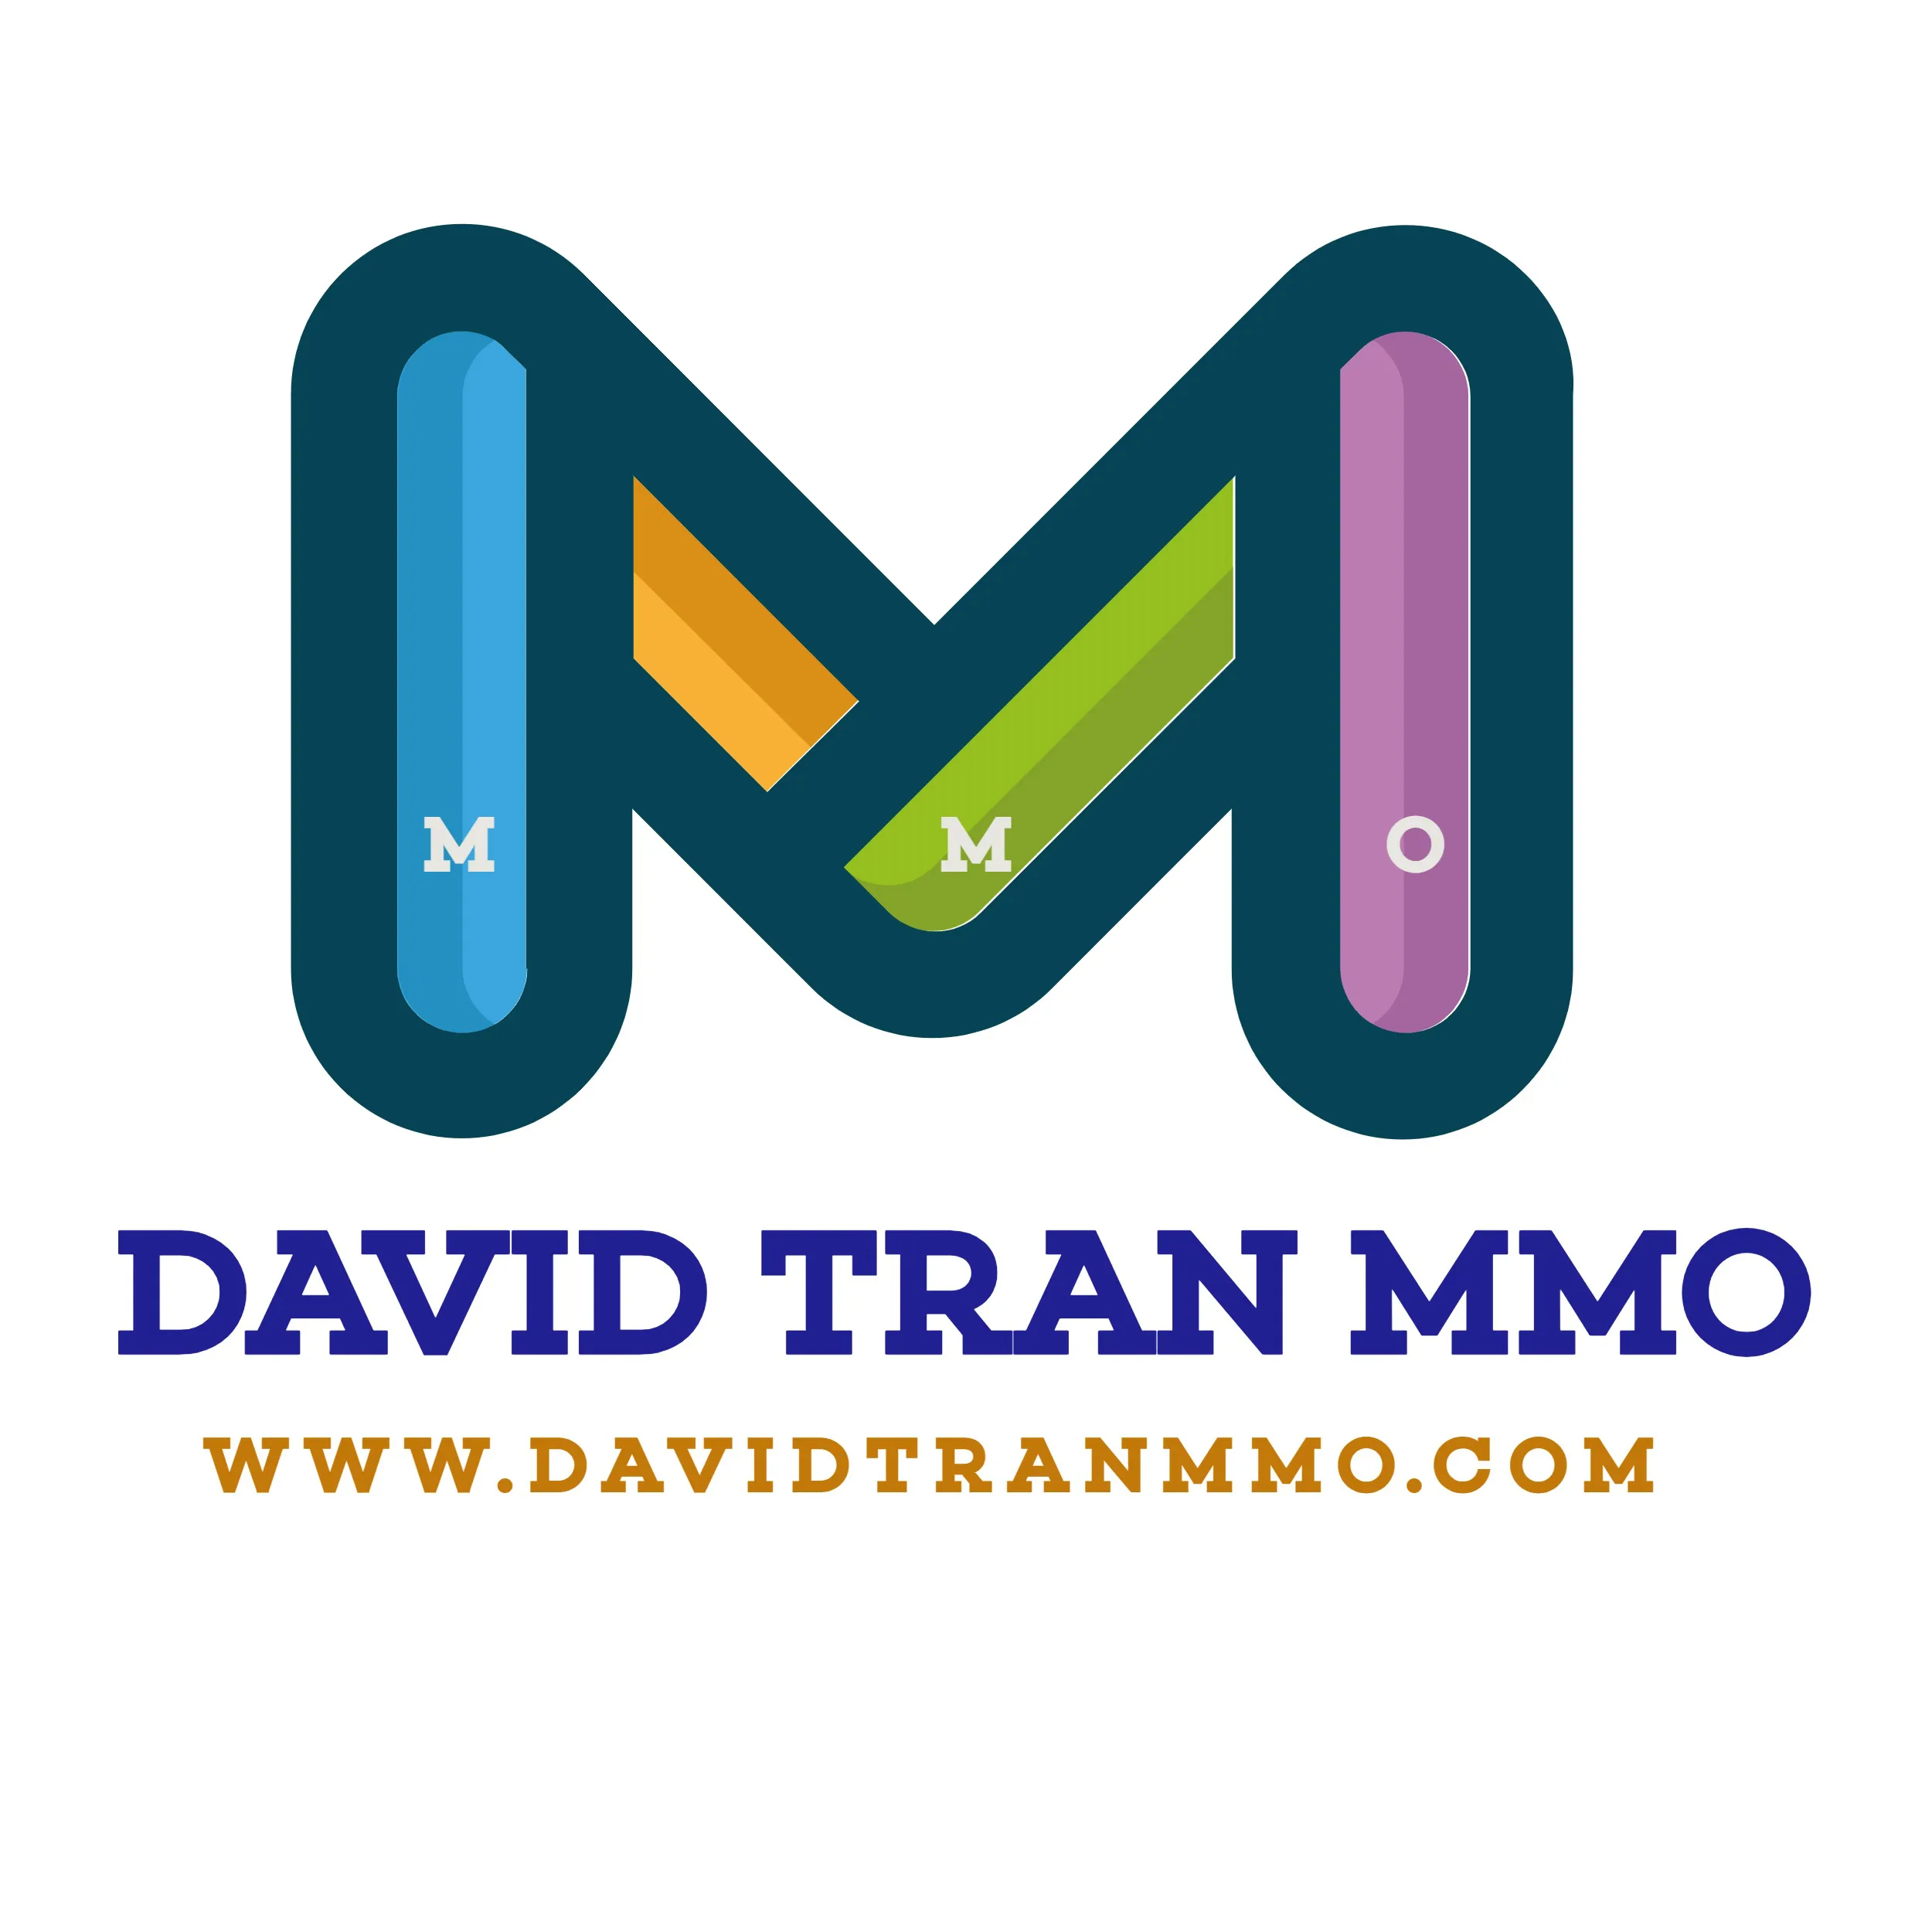 David Tran MMO